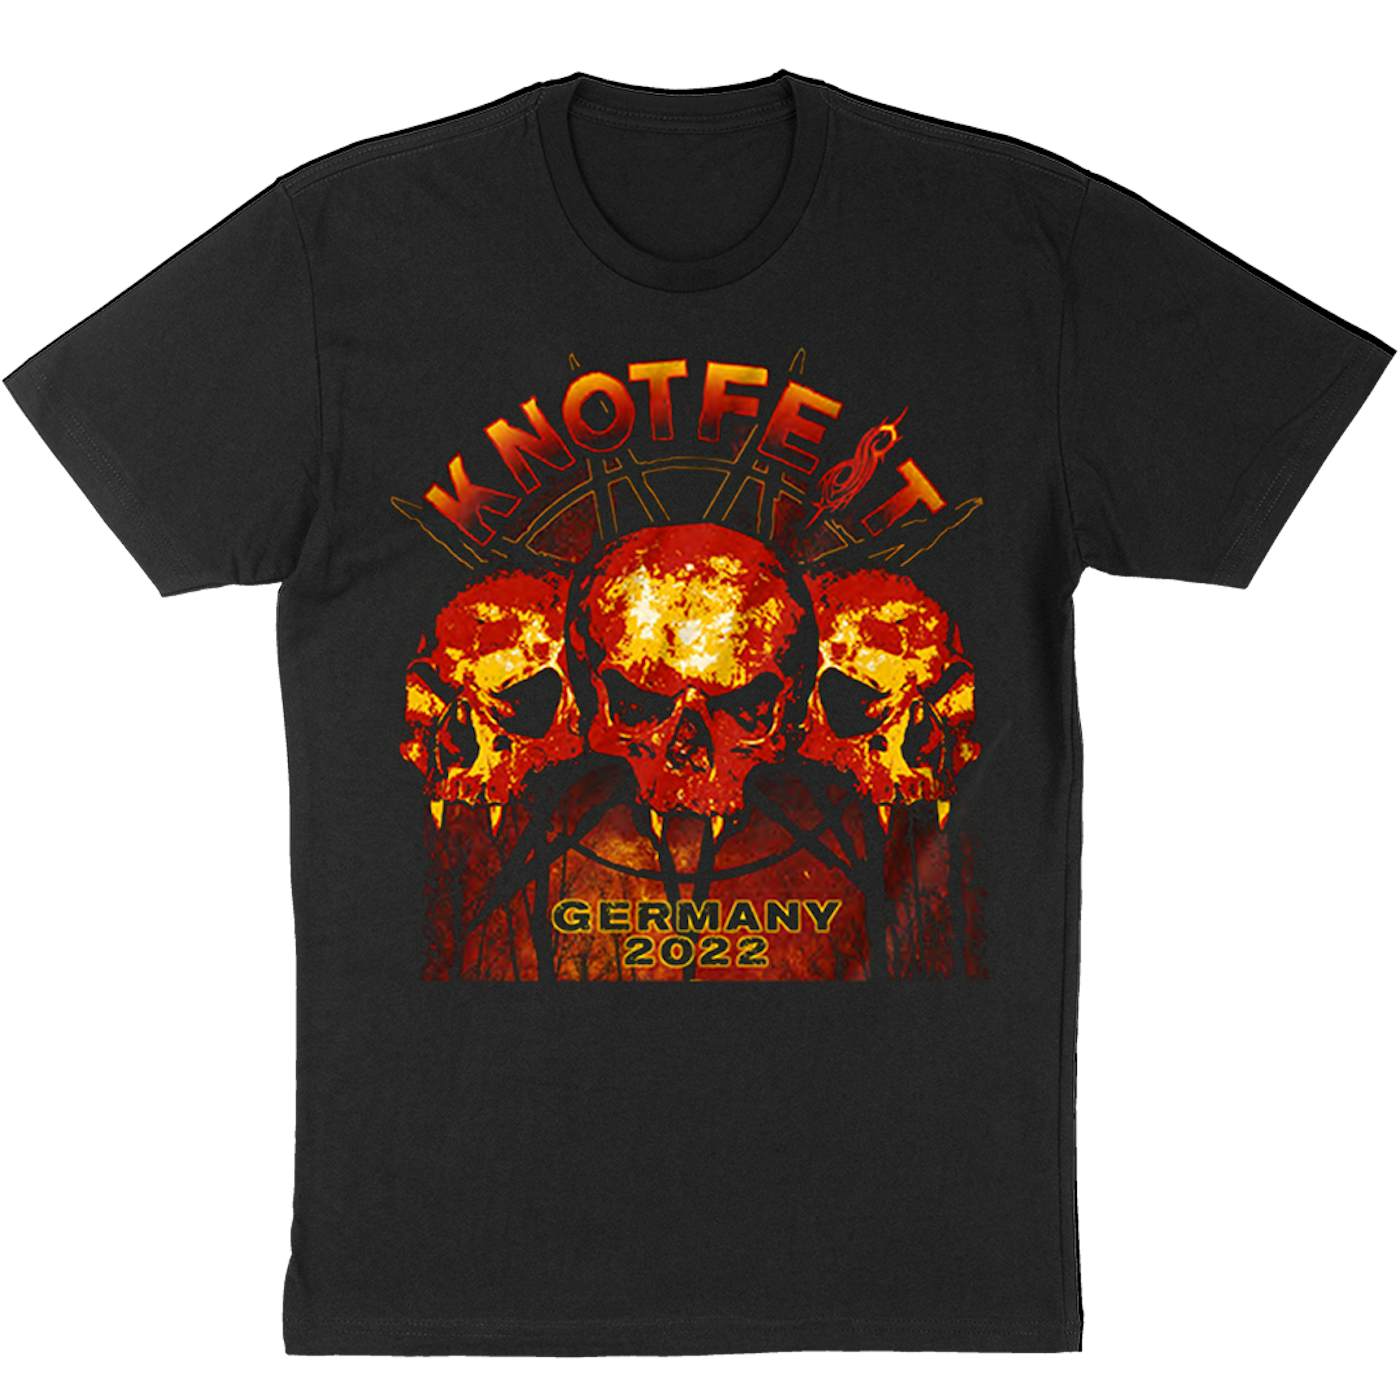 Slipknot Knotfest Germany 3 Skulls T-Shirt